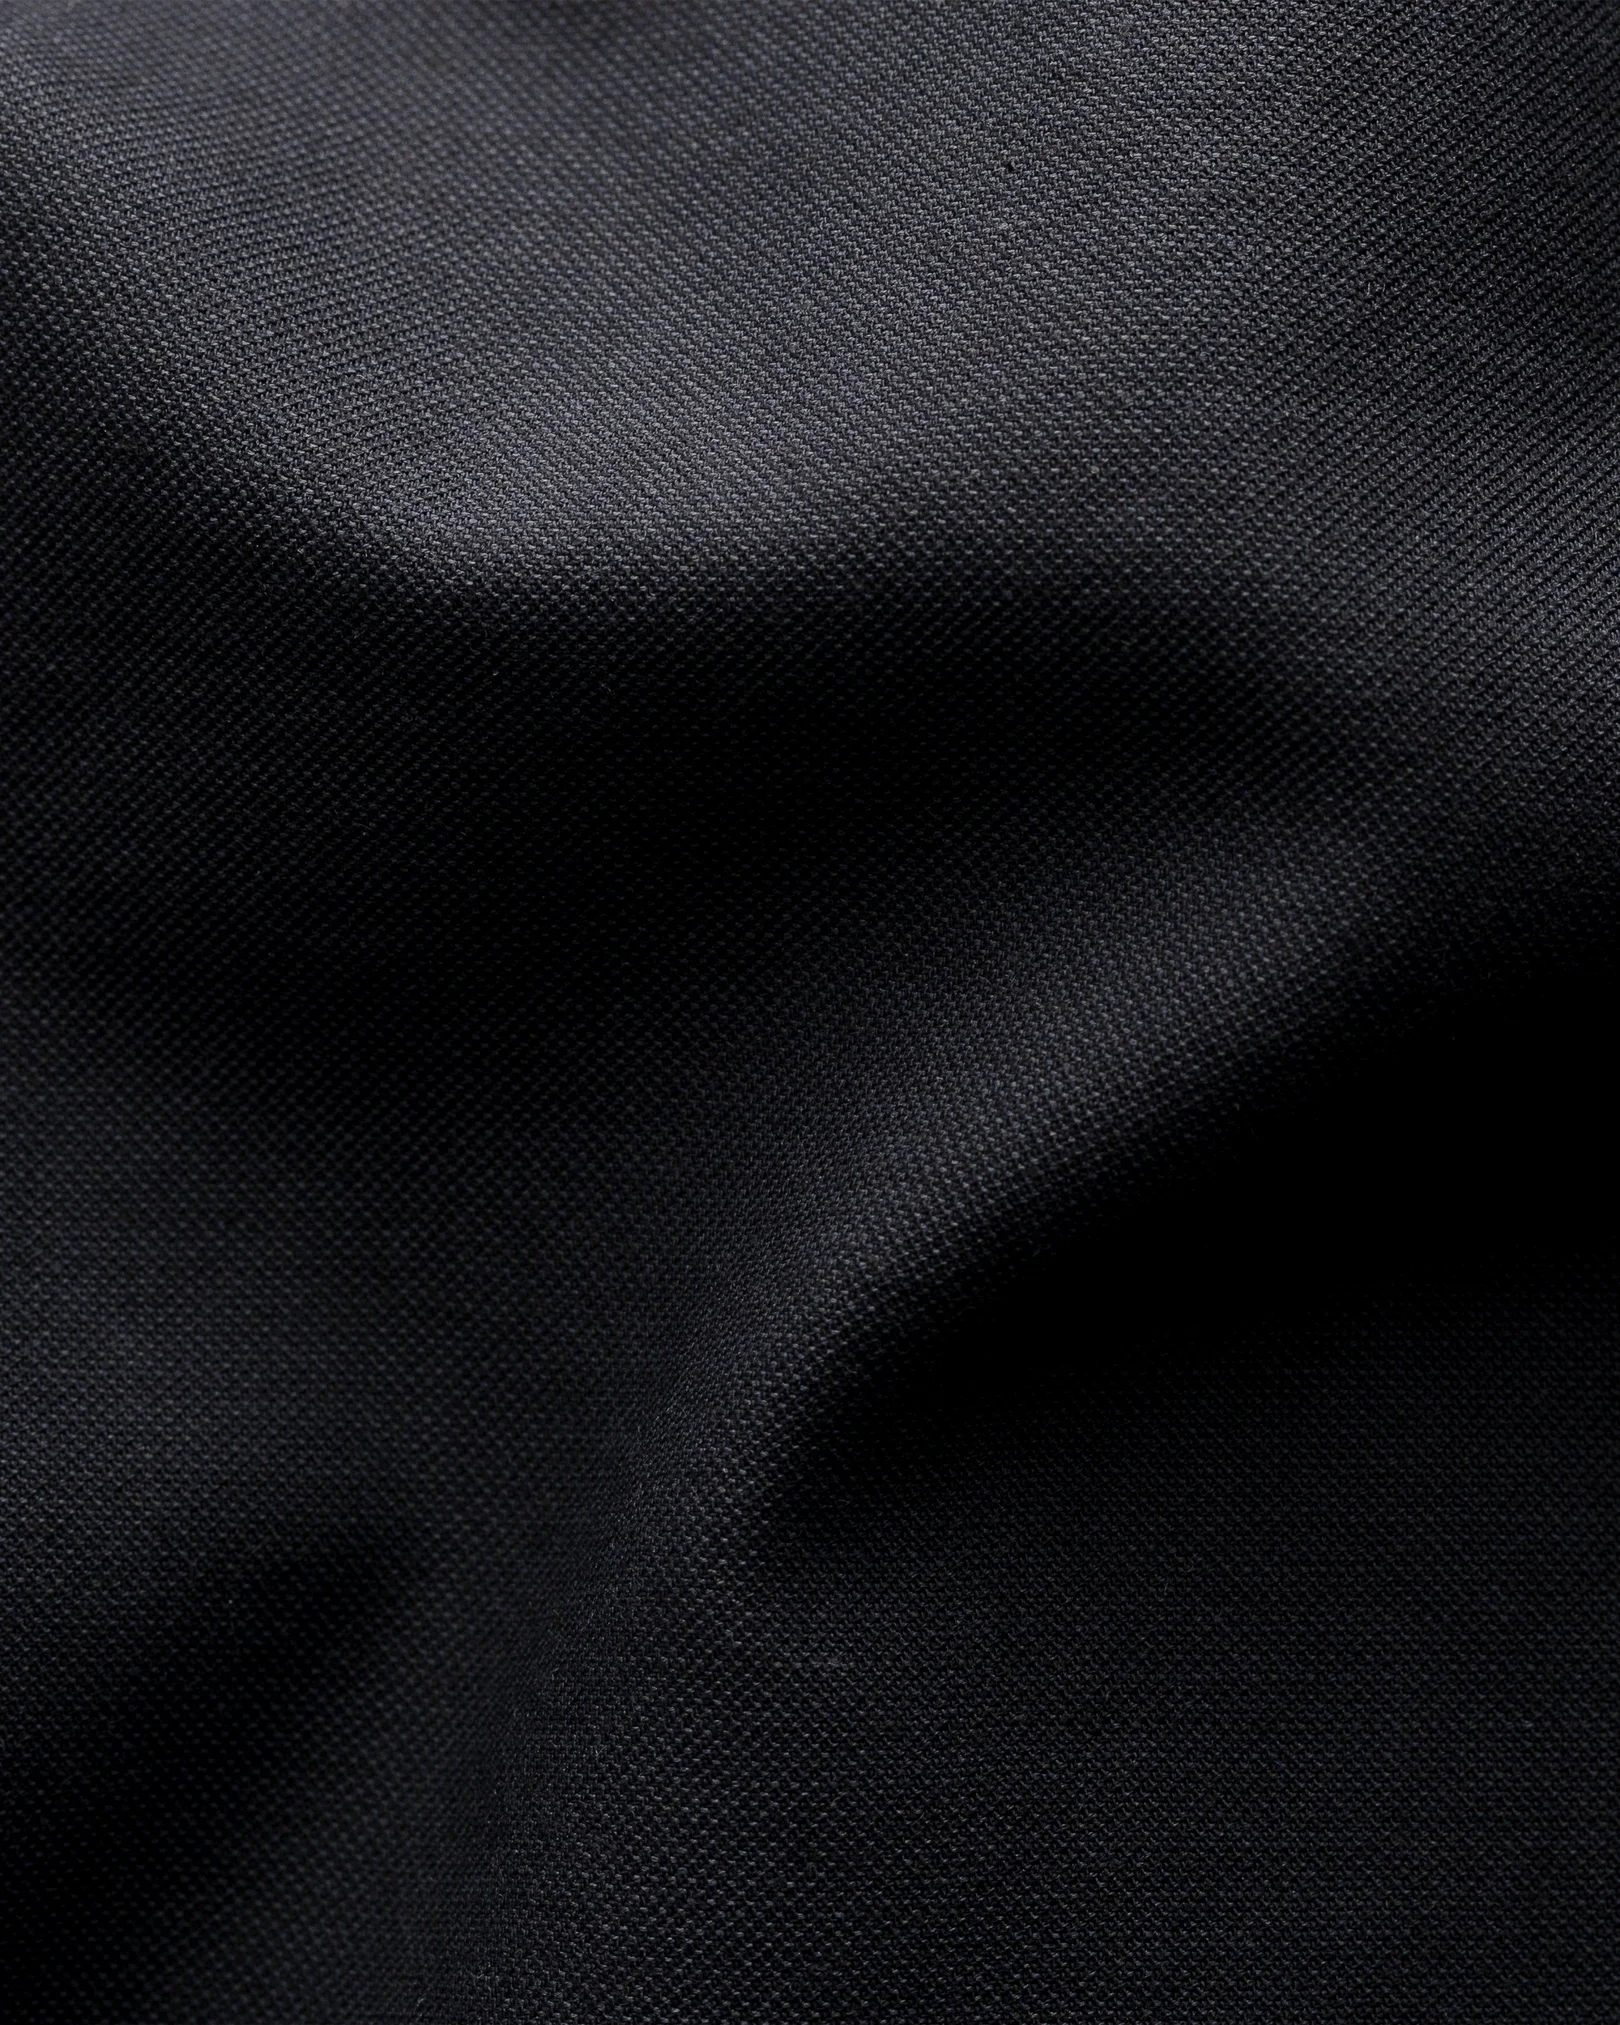 Eton - black t shirt in woven twill